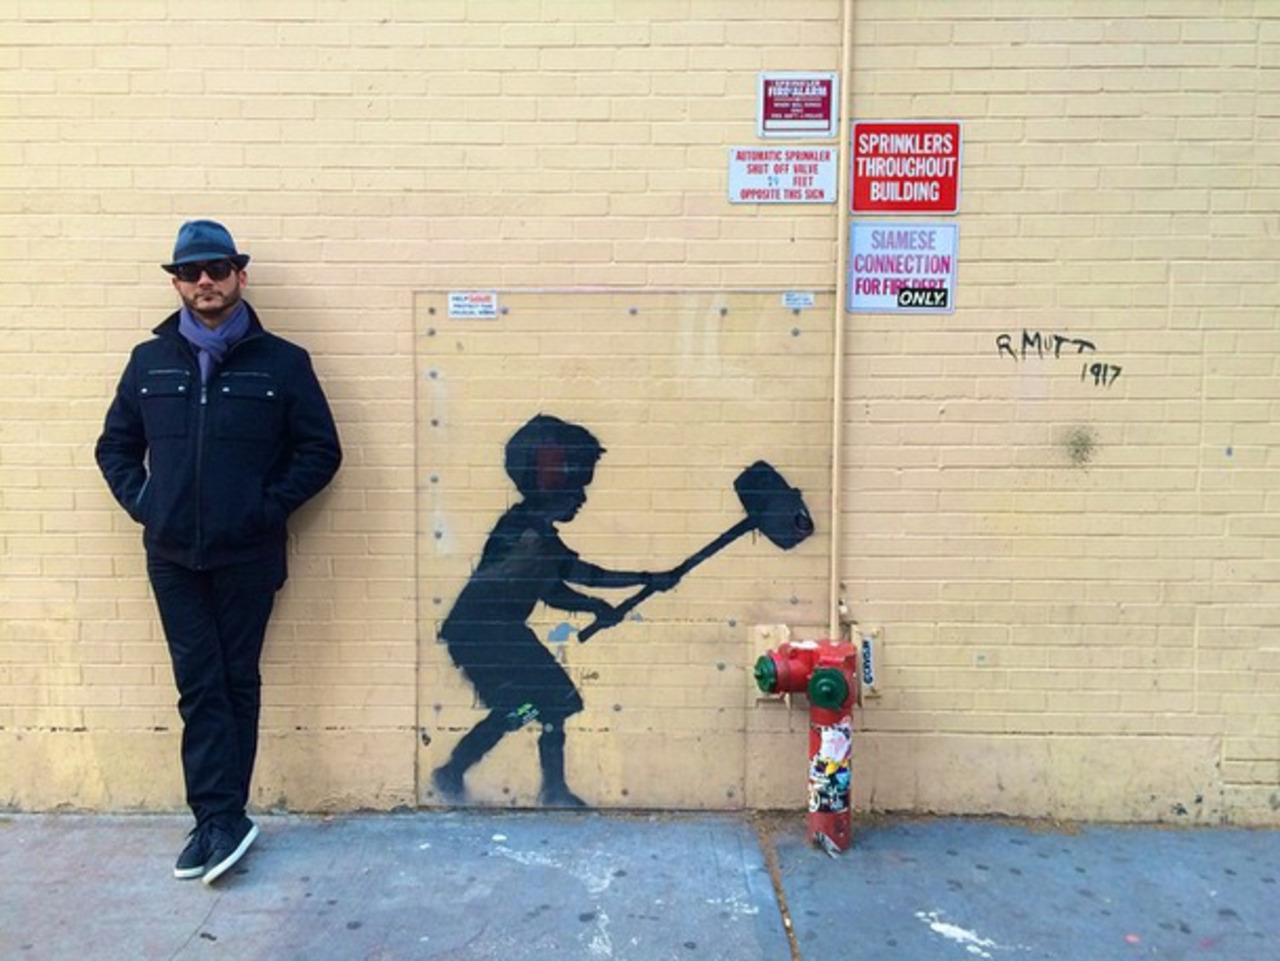 Banksy's "Hammer Boy"
#artecollective #banksy #banksyny #streetart #newyork #art #streetartnews #graffiti #mural http://t.co/tmQukBWZXp